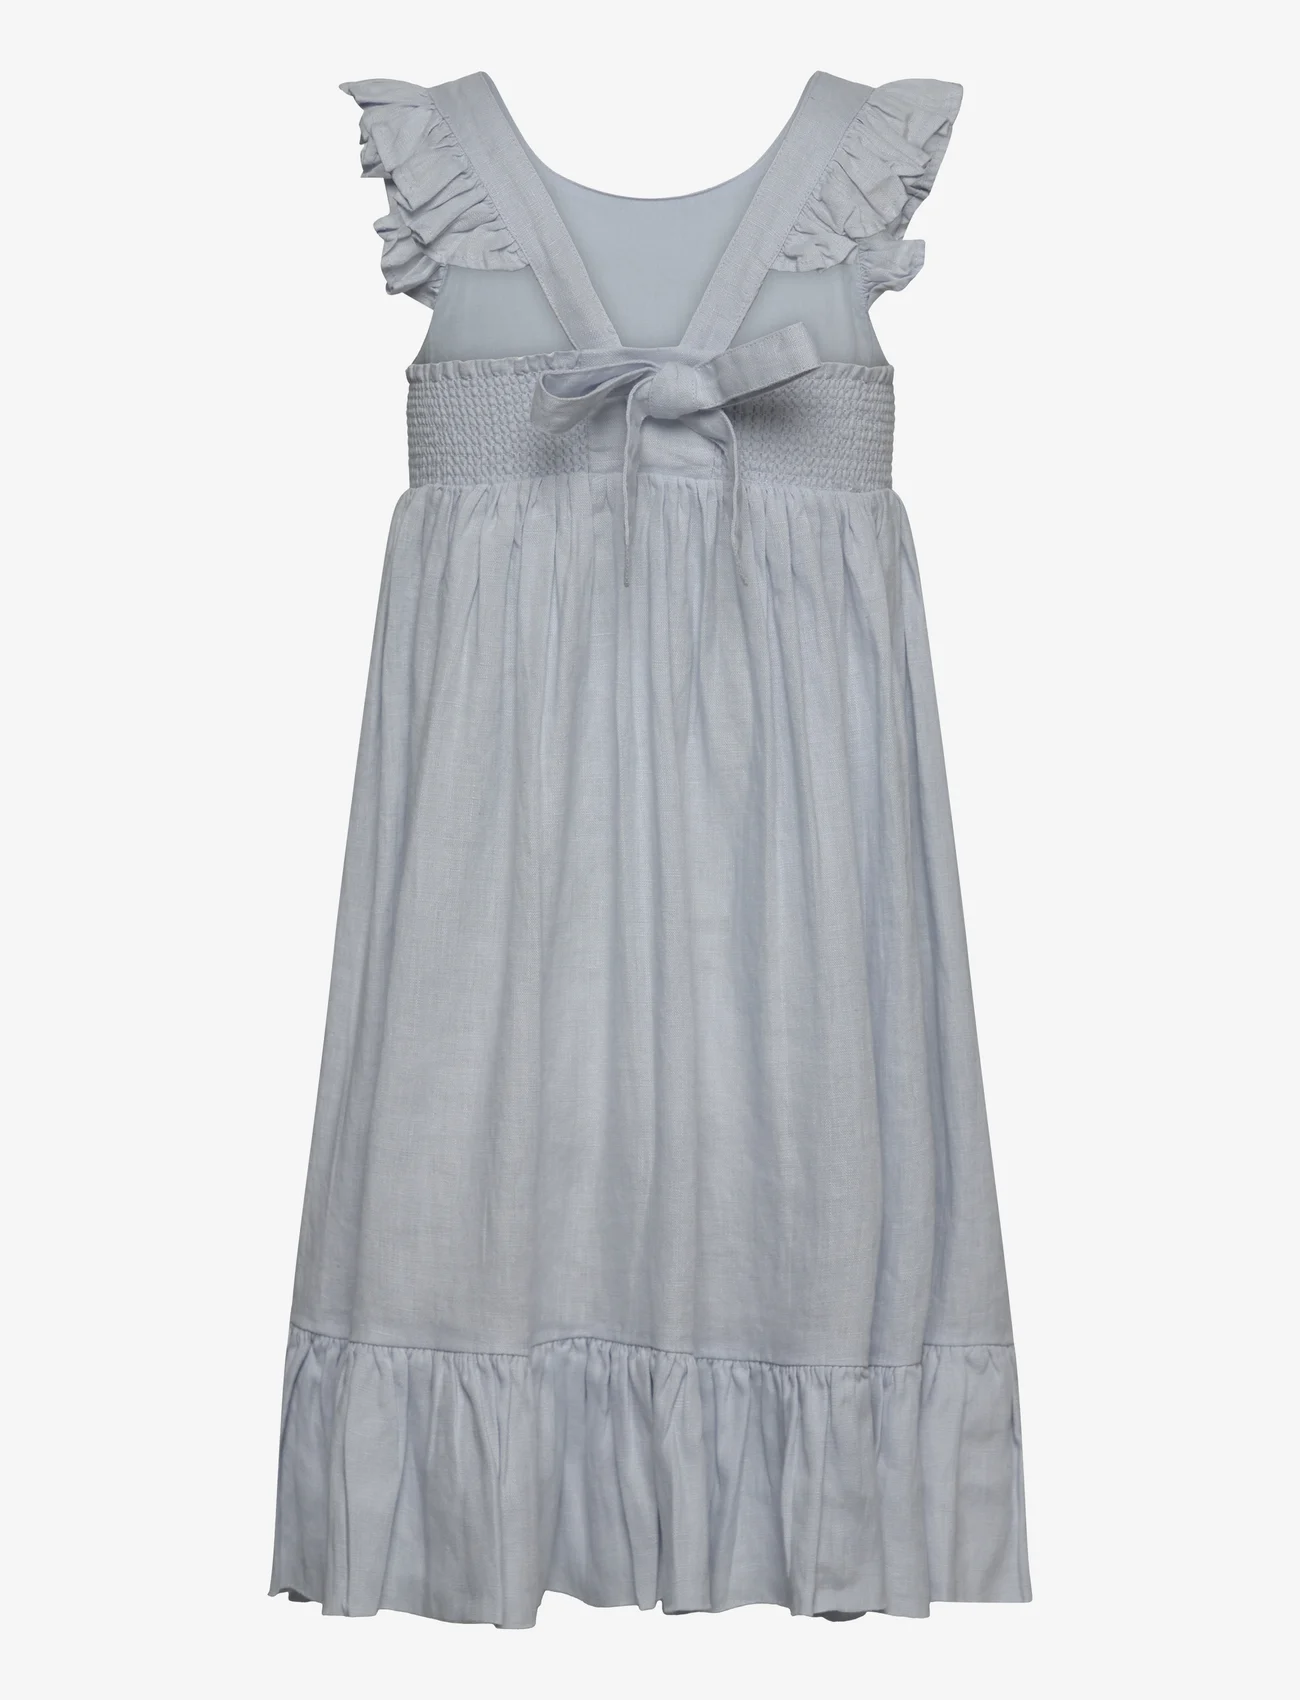 MarMar Copenhagen - Danita Frill - sleeveless casual dresses - blue mist - 1